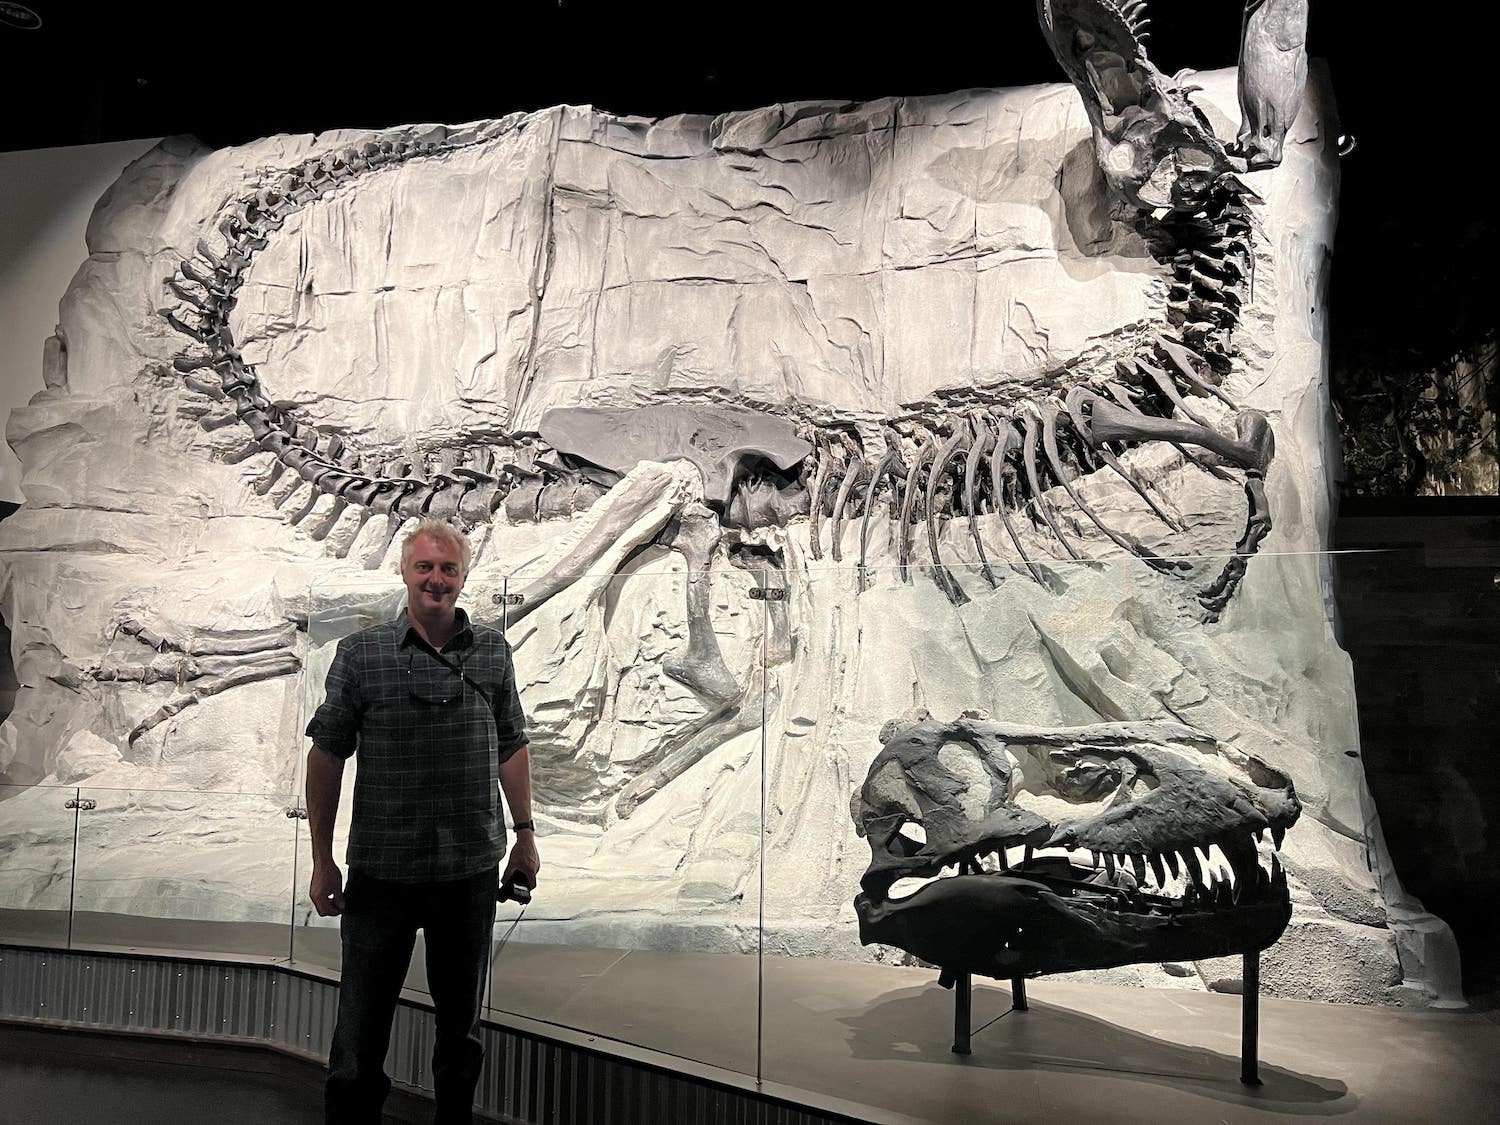 Hamish with dinosaur fossil